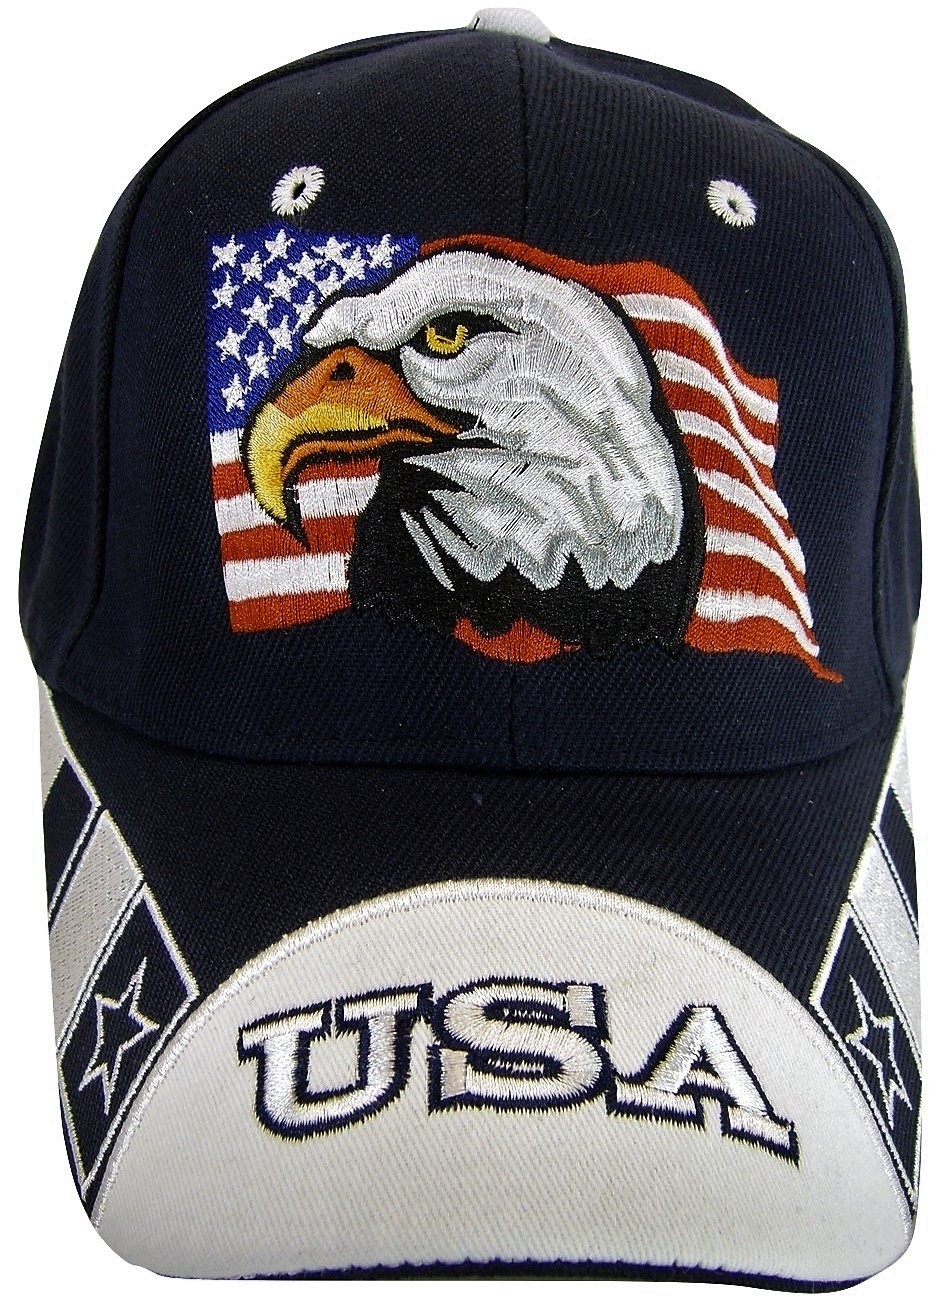 USA American Flag & Bald Eagle Patriotic Men's Adjustable Baseball Cap Hat NAVY